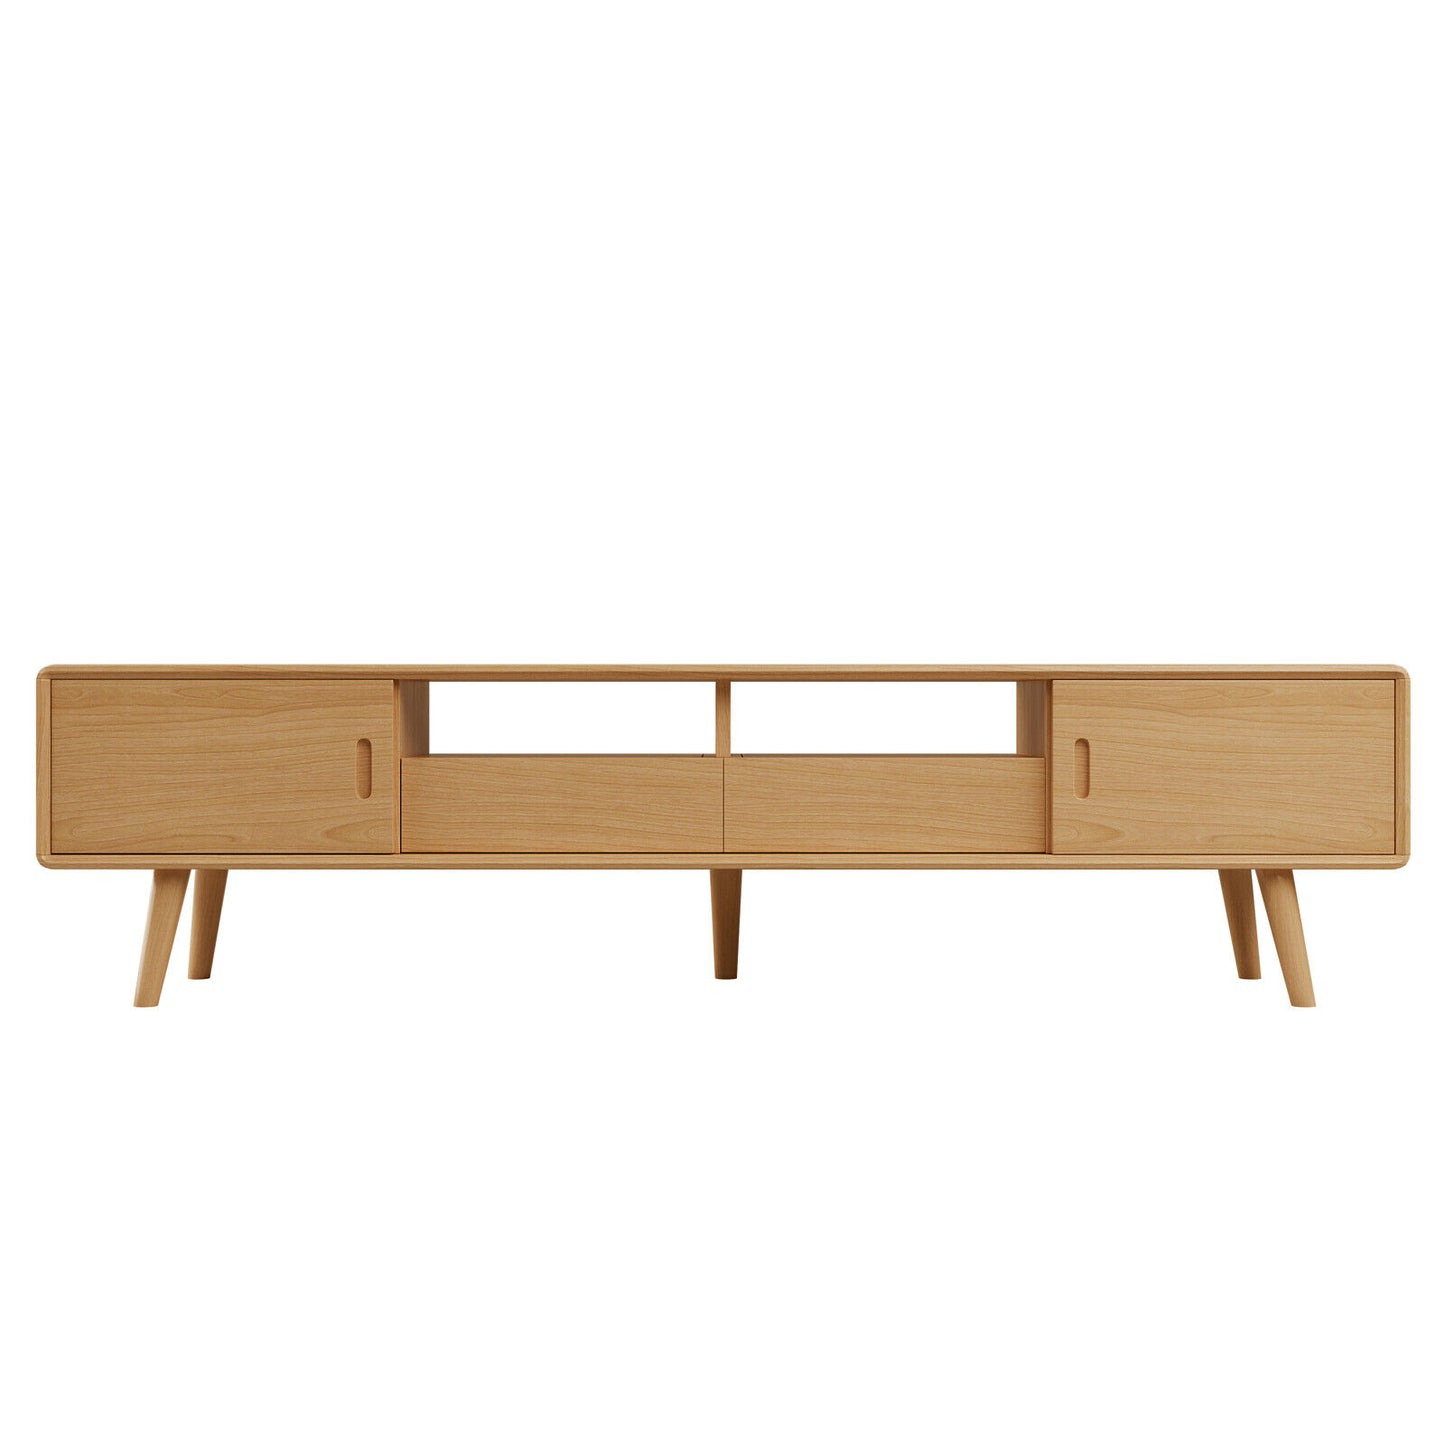 180 cm TV Stand Cabinet Solid Wood Oak Entertainment Unit Storage Furniture